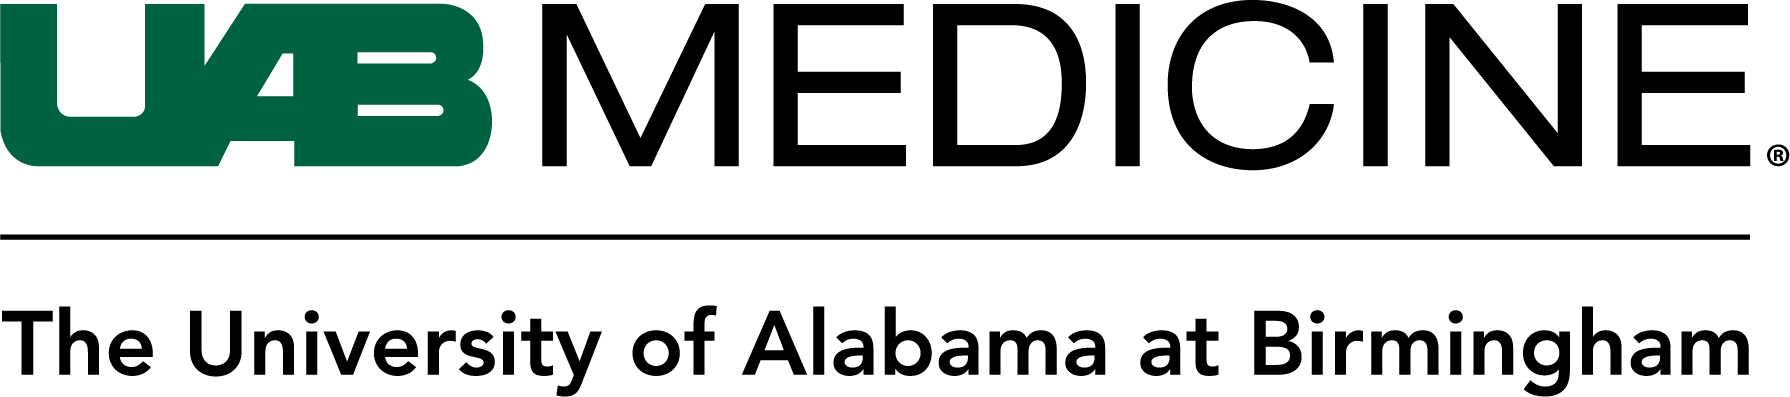 University of Alabama at Birmingham Medicine